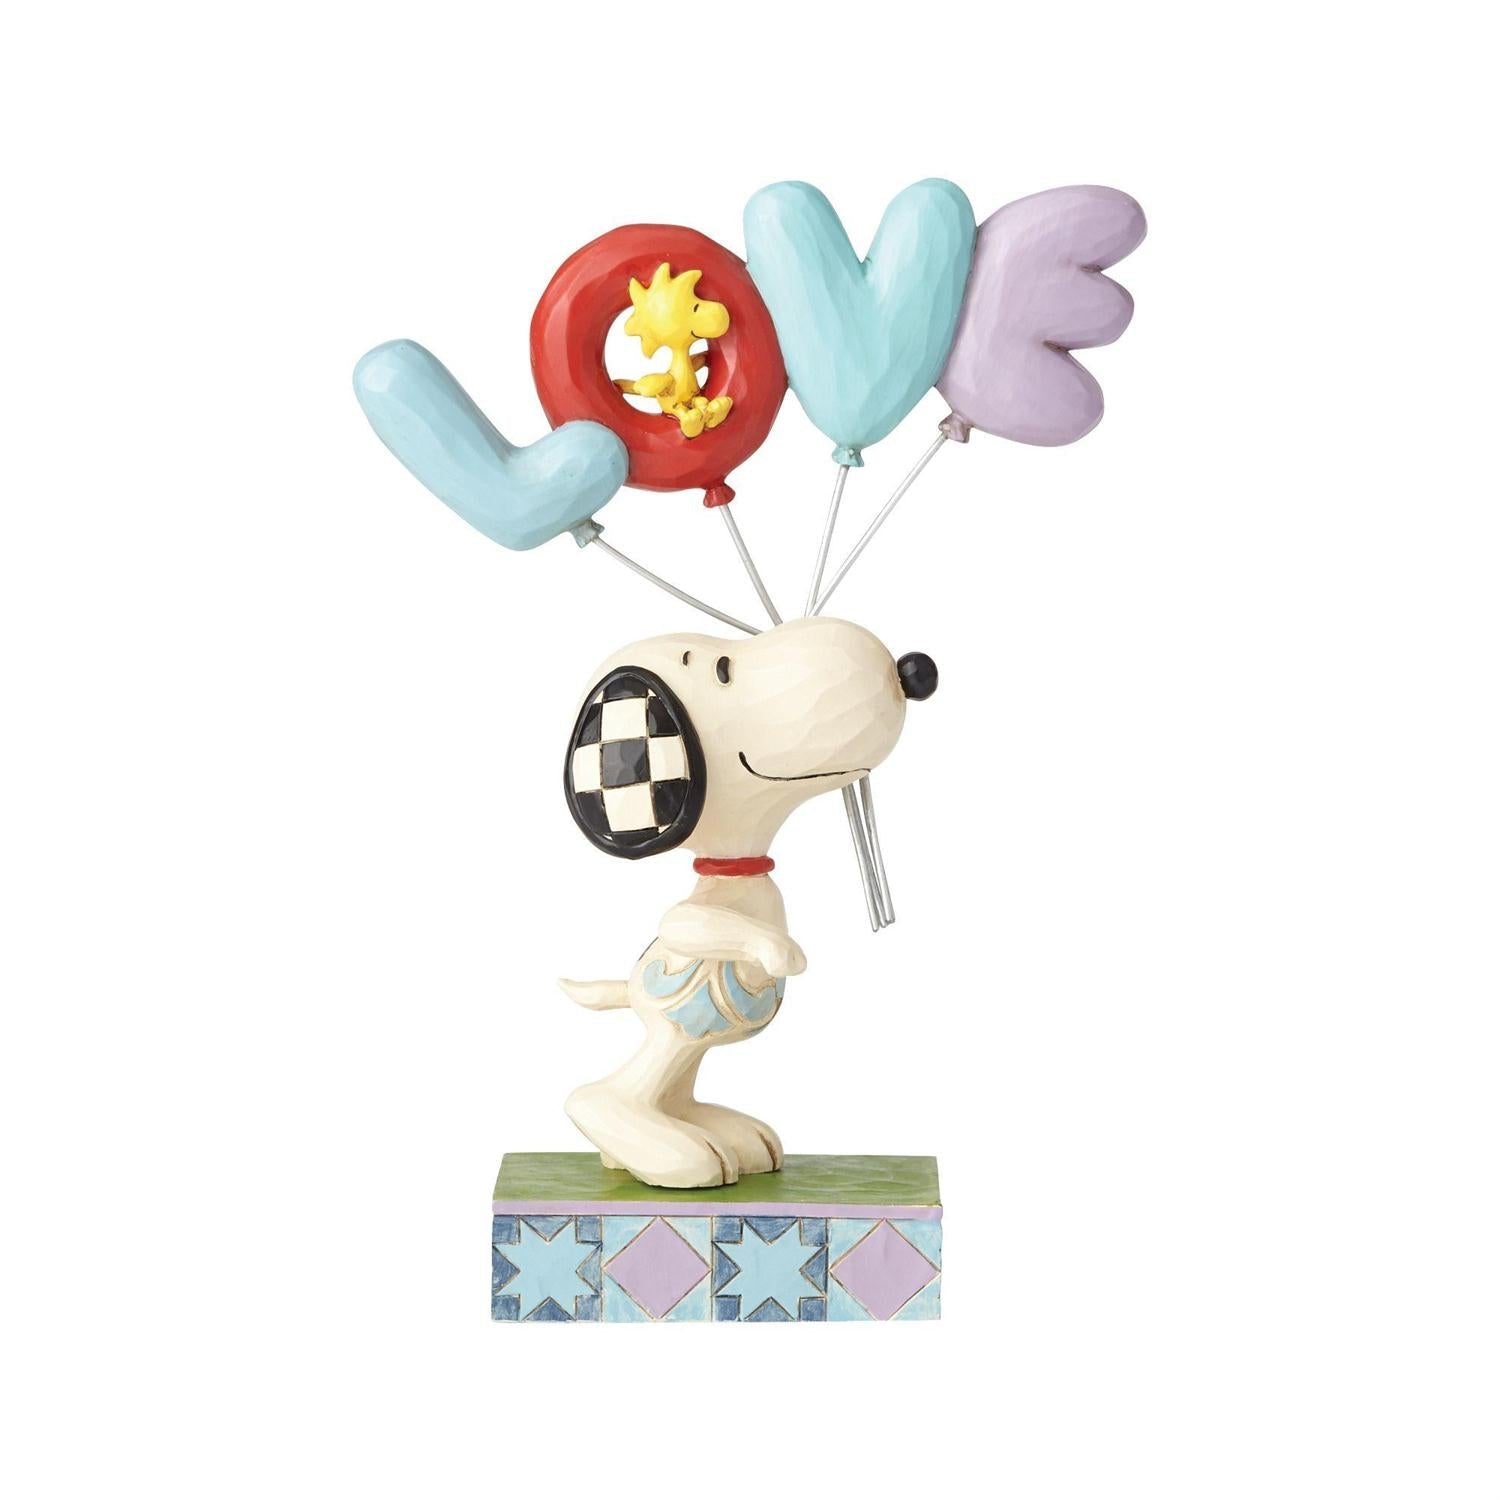 Enesco Jim Shore Peanuts Snoopy with Love Balloon Figurine, 7.5 Inch, Multicolor